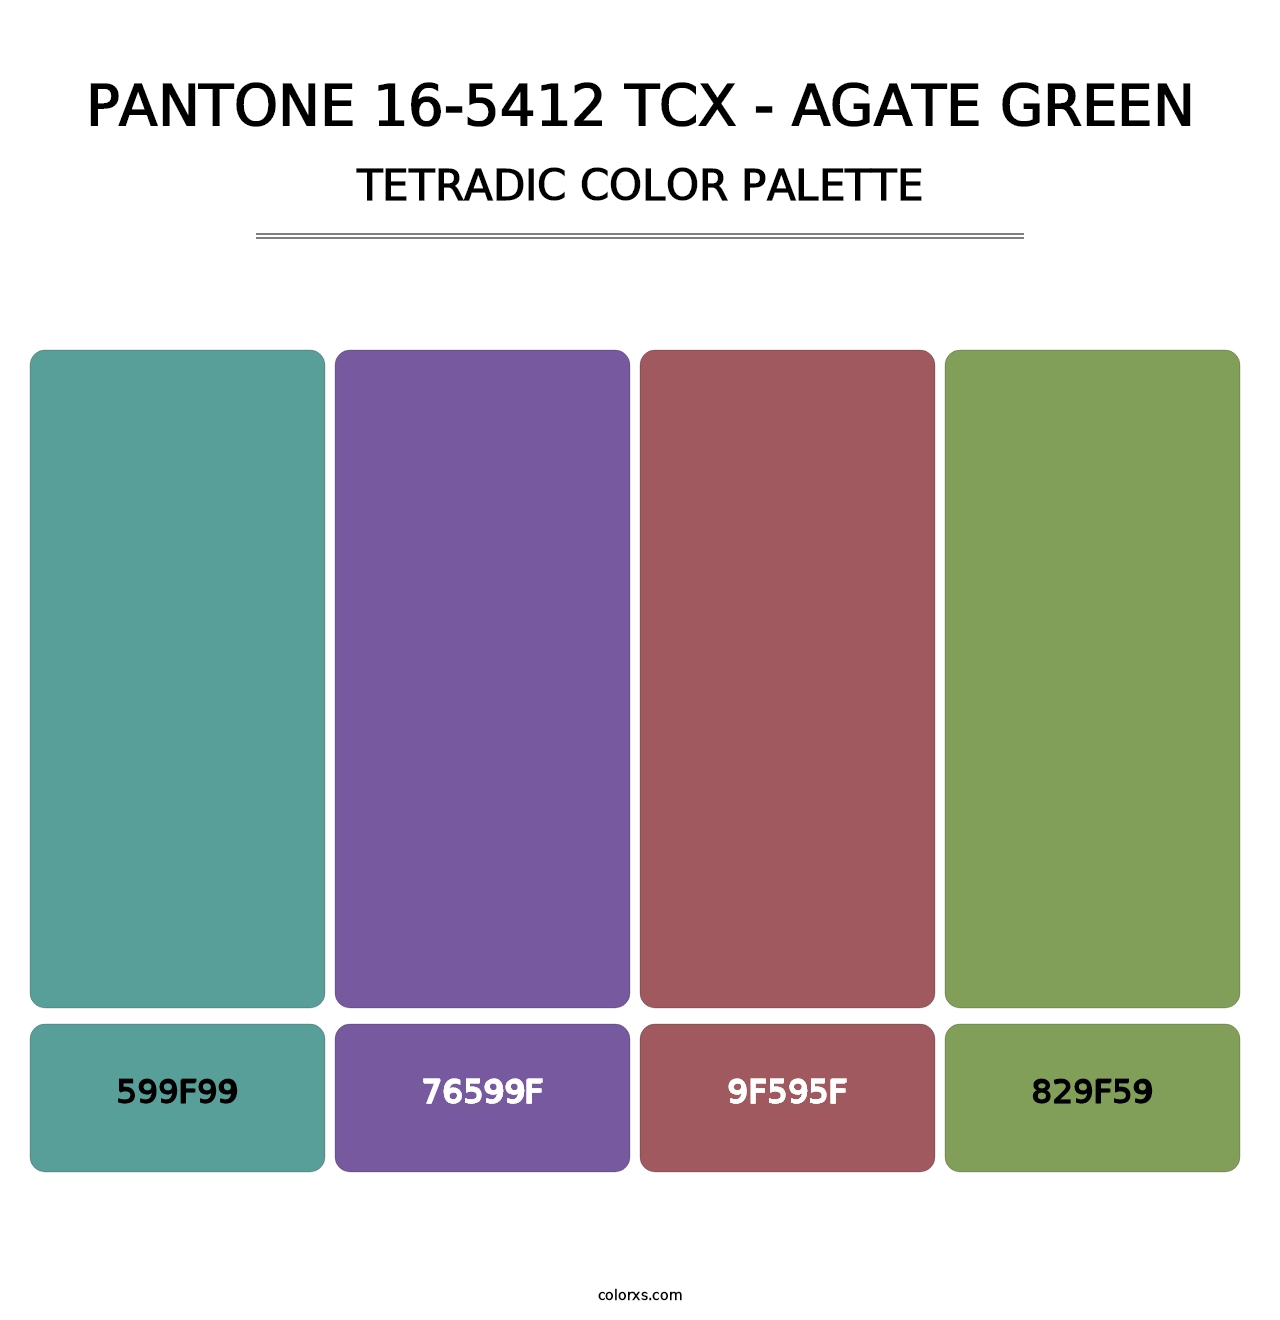 PANTONE 16-5412 TCX - Agate Green - Tetradic Color Palette